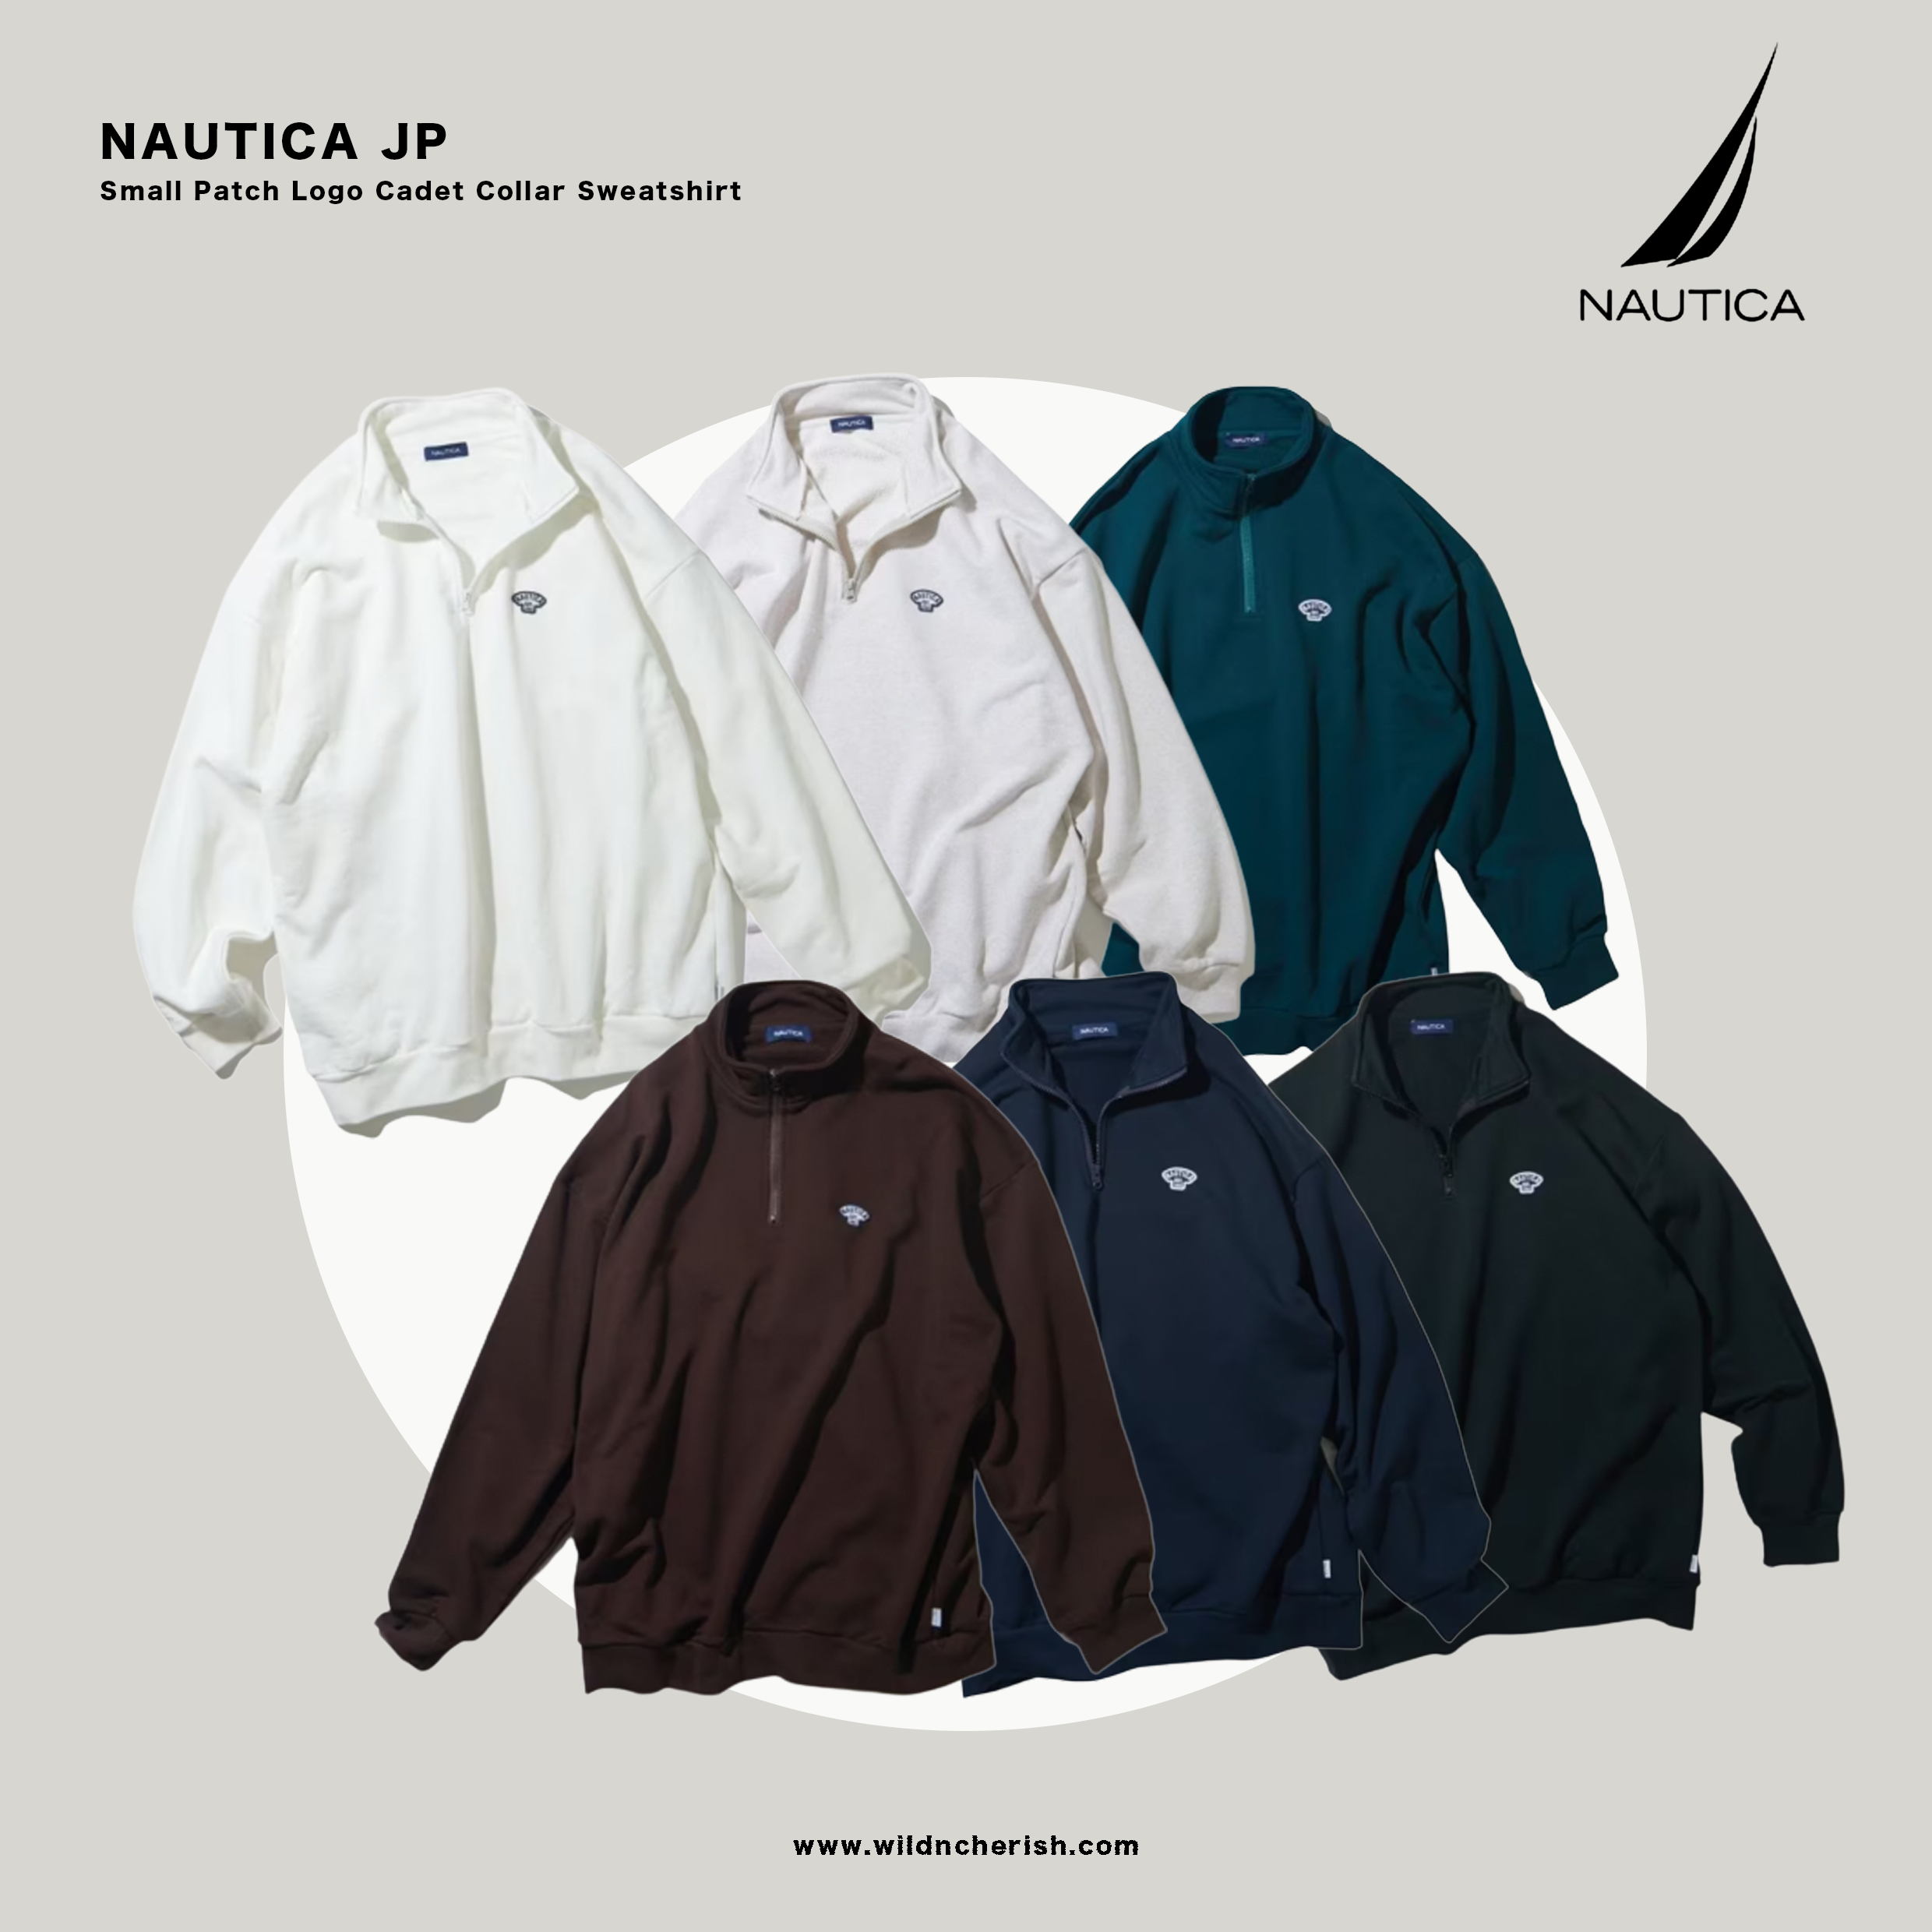 NAUTICA/ノーティカ Small Patch Logo Cadet Collar Sweatshirt